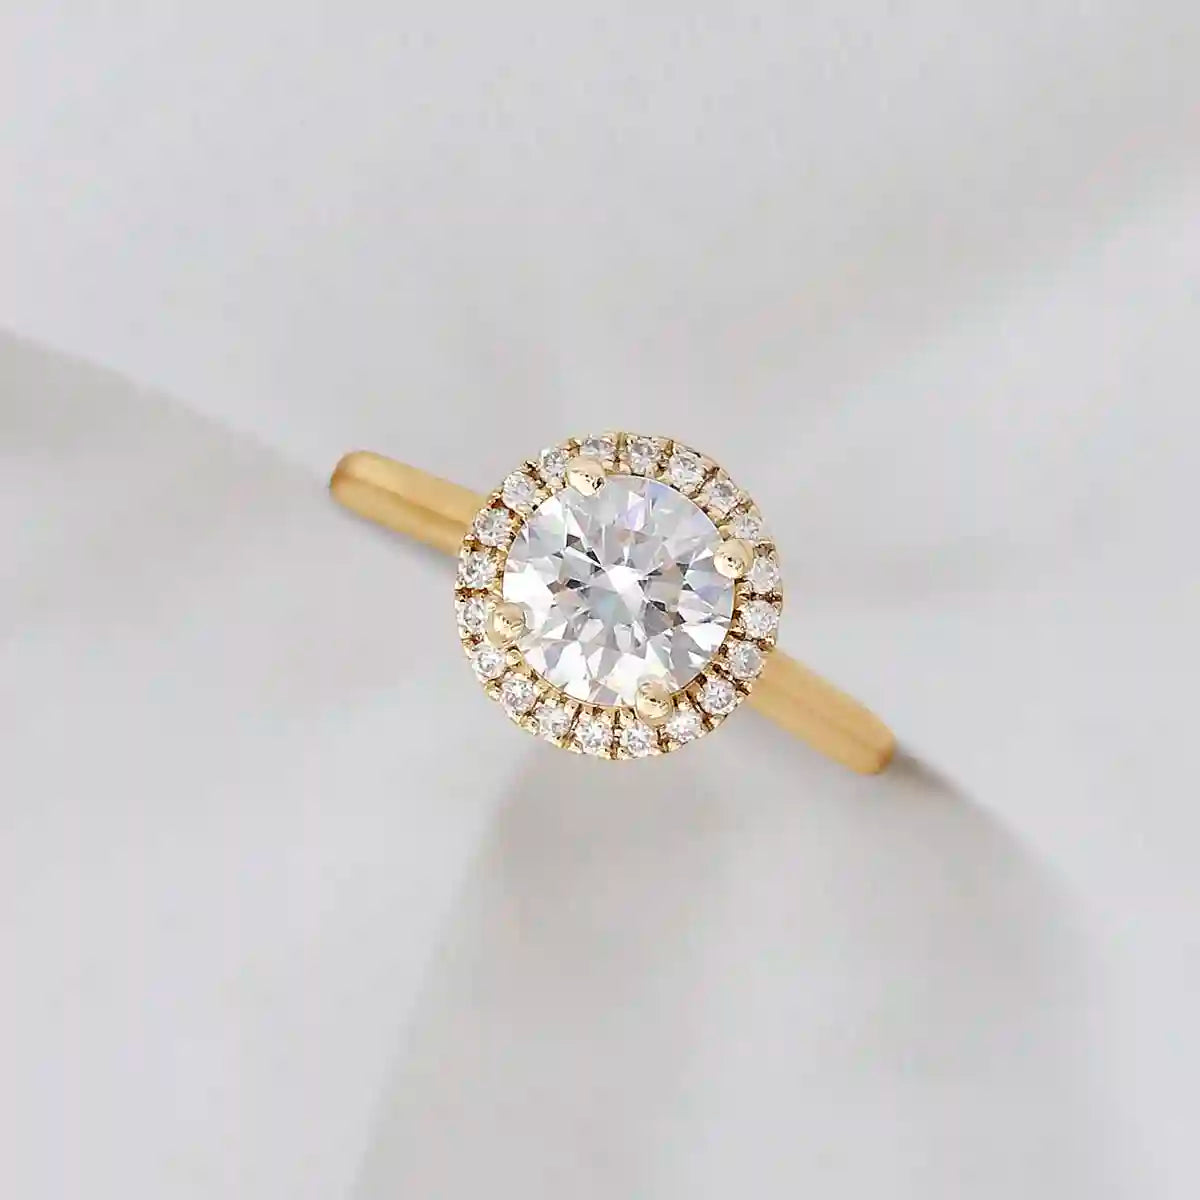 Bespoke yellow gold lab diamond engagement ring with pave diamond halo